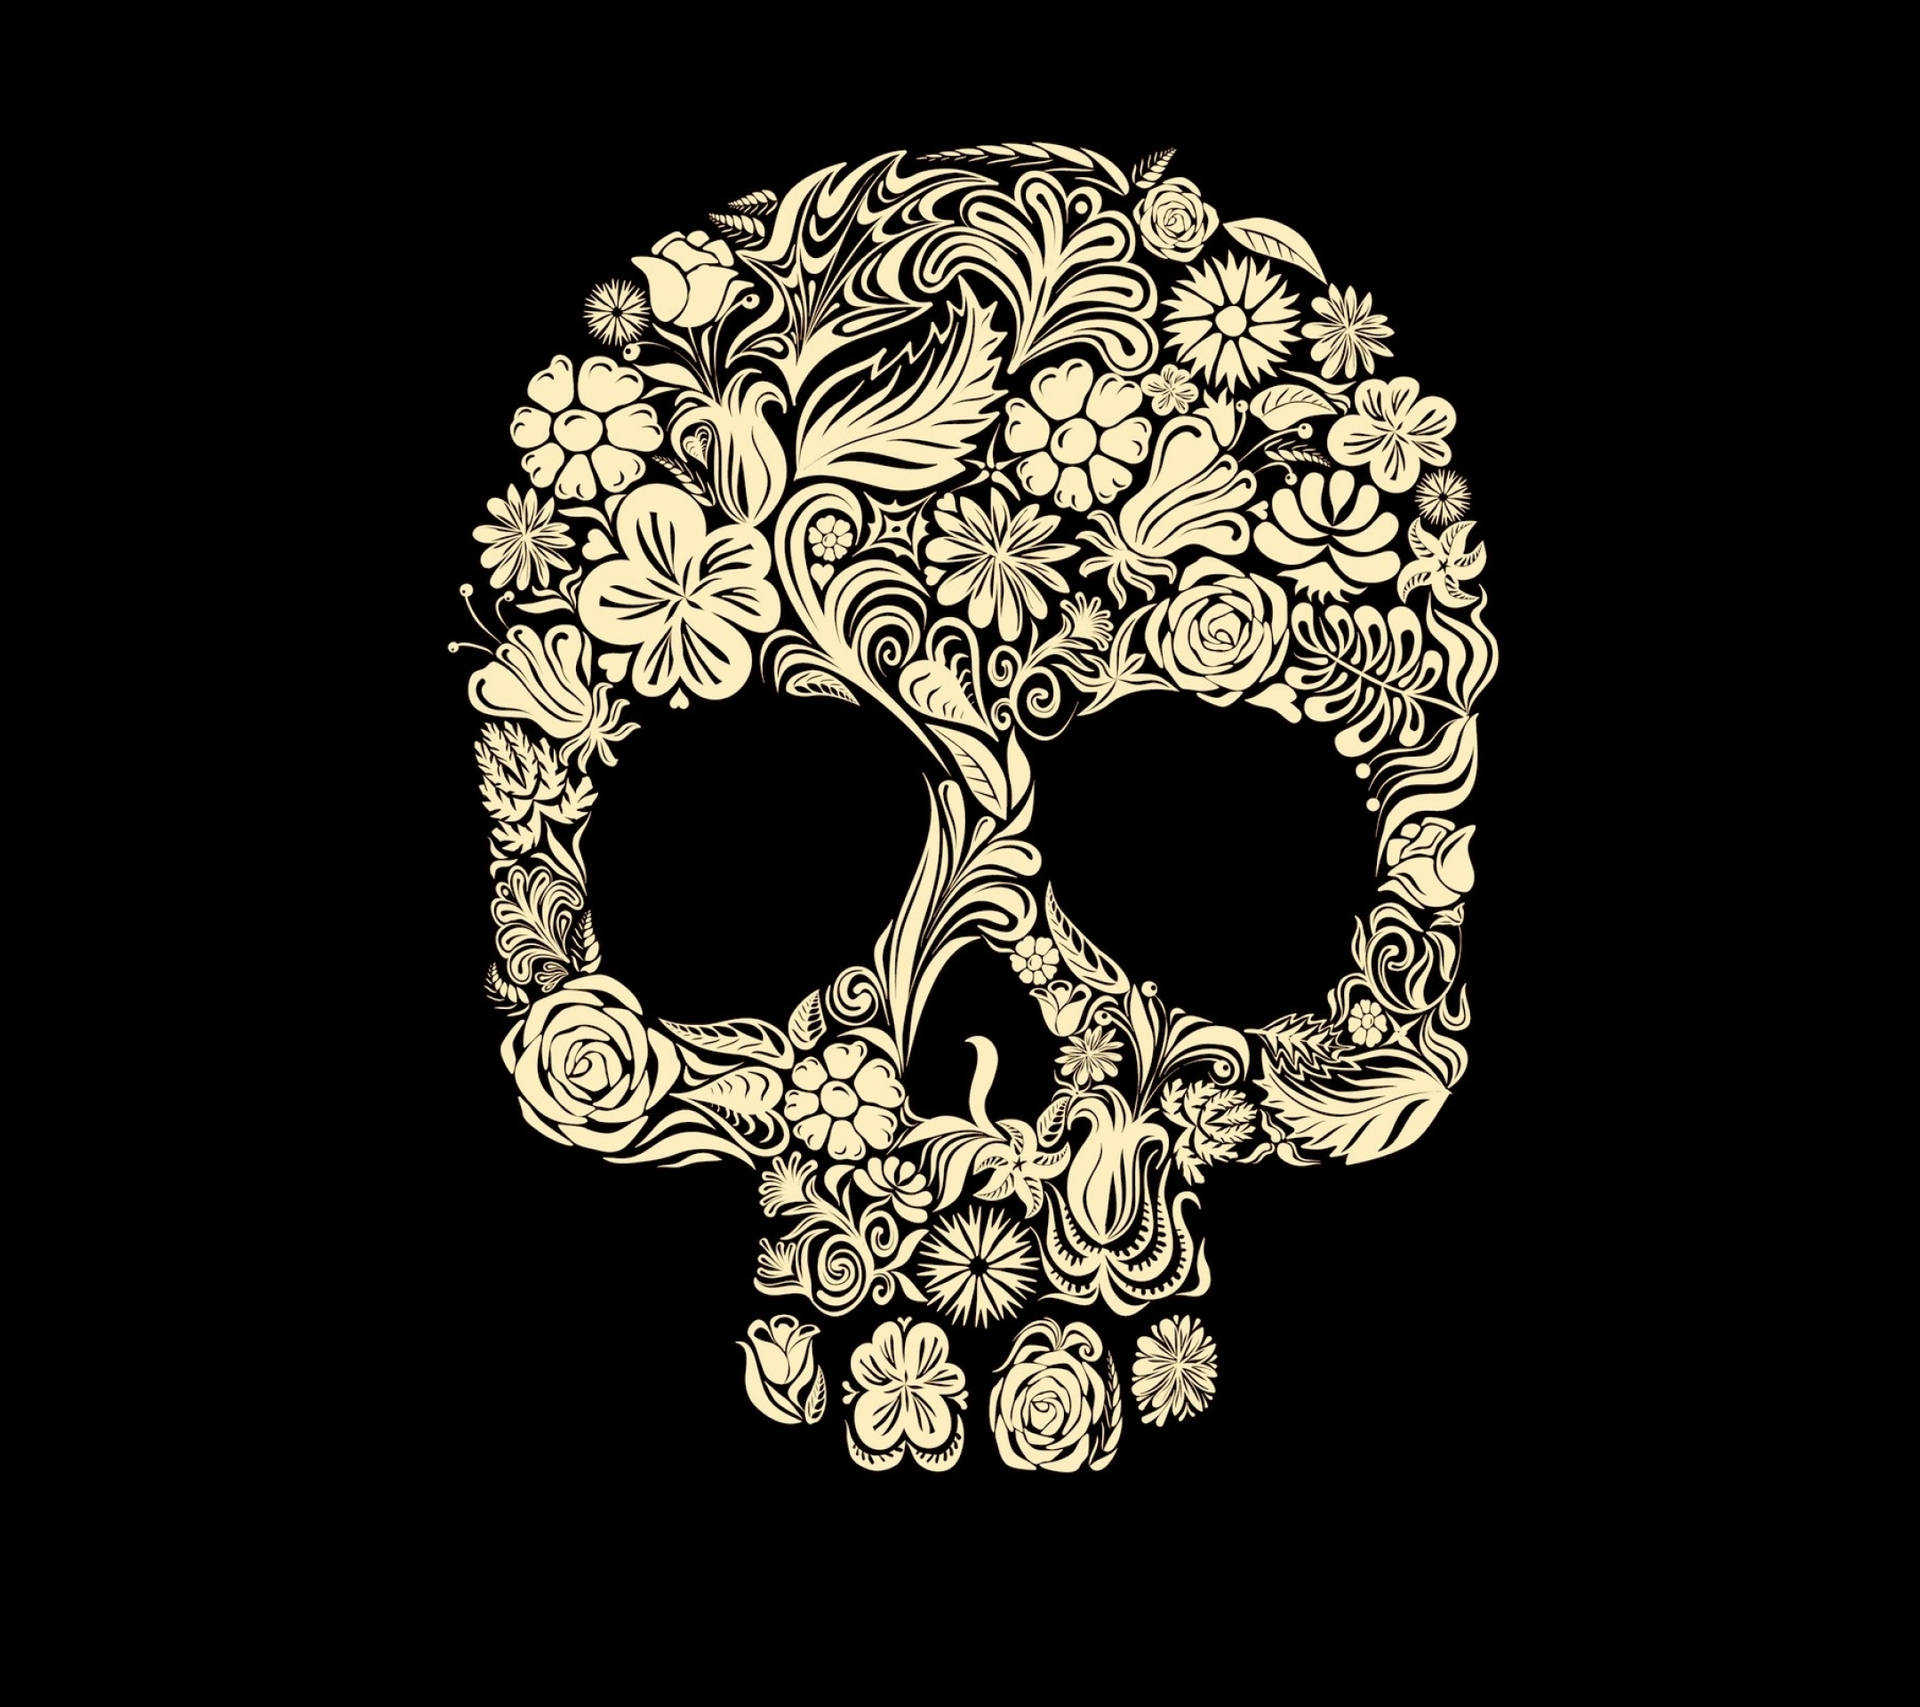 Floral skull image wallpaper.